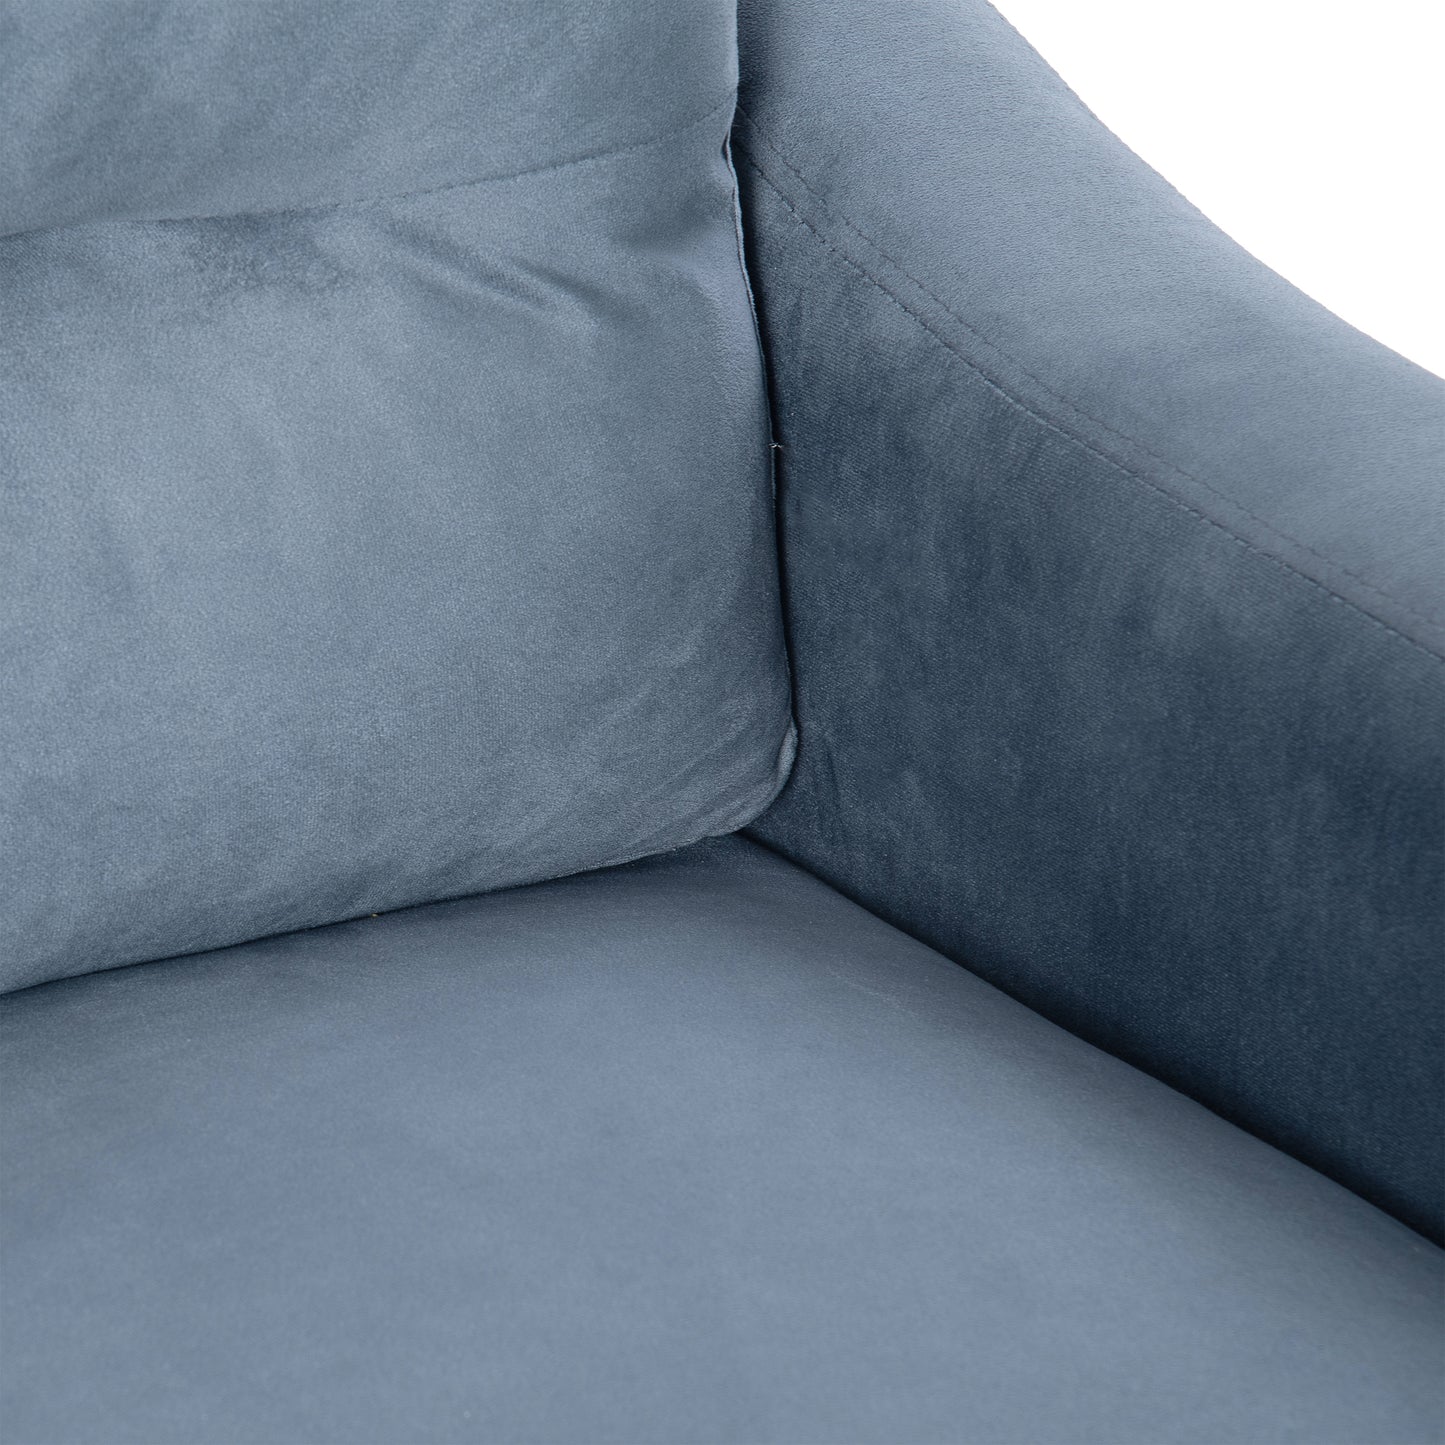 Couch Comfortable Velvet Upholstered Armchair Sofa